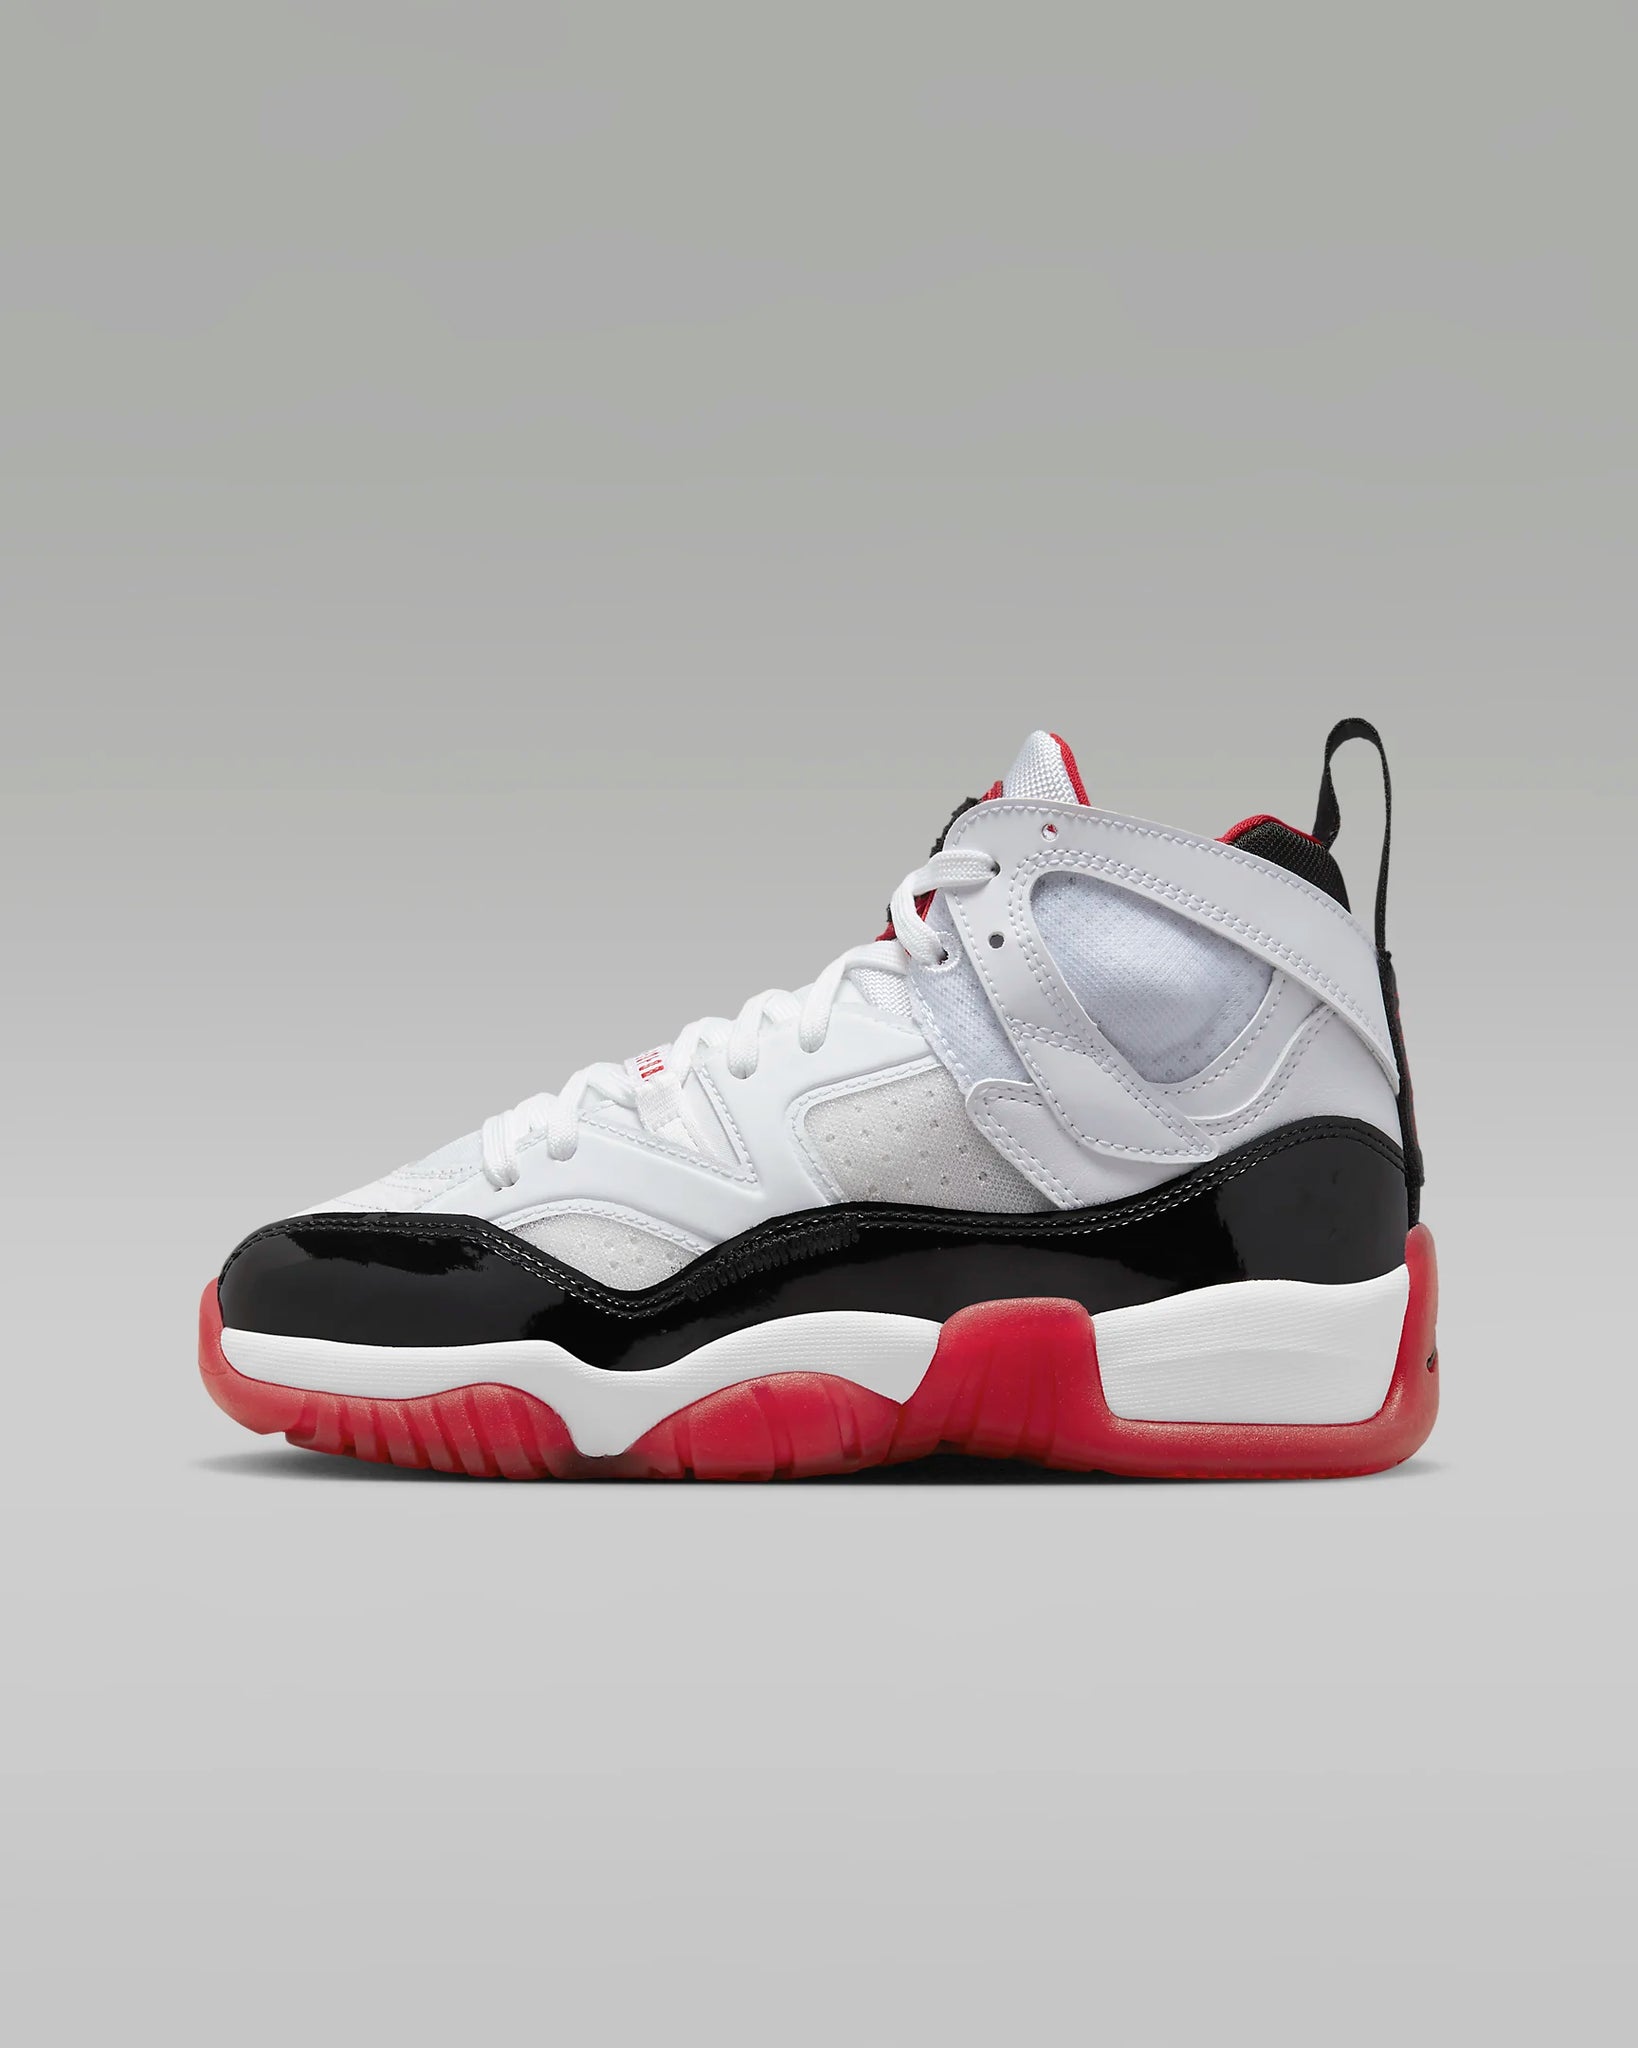 Jordan Sneakers "Jumpman Two Trey" GS Junior White/Gym Red/Black